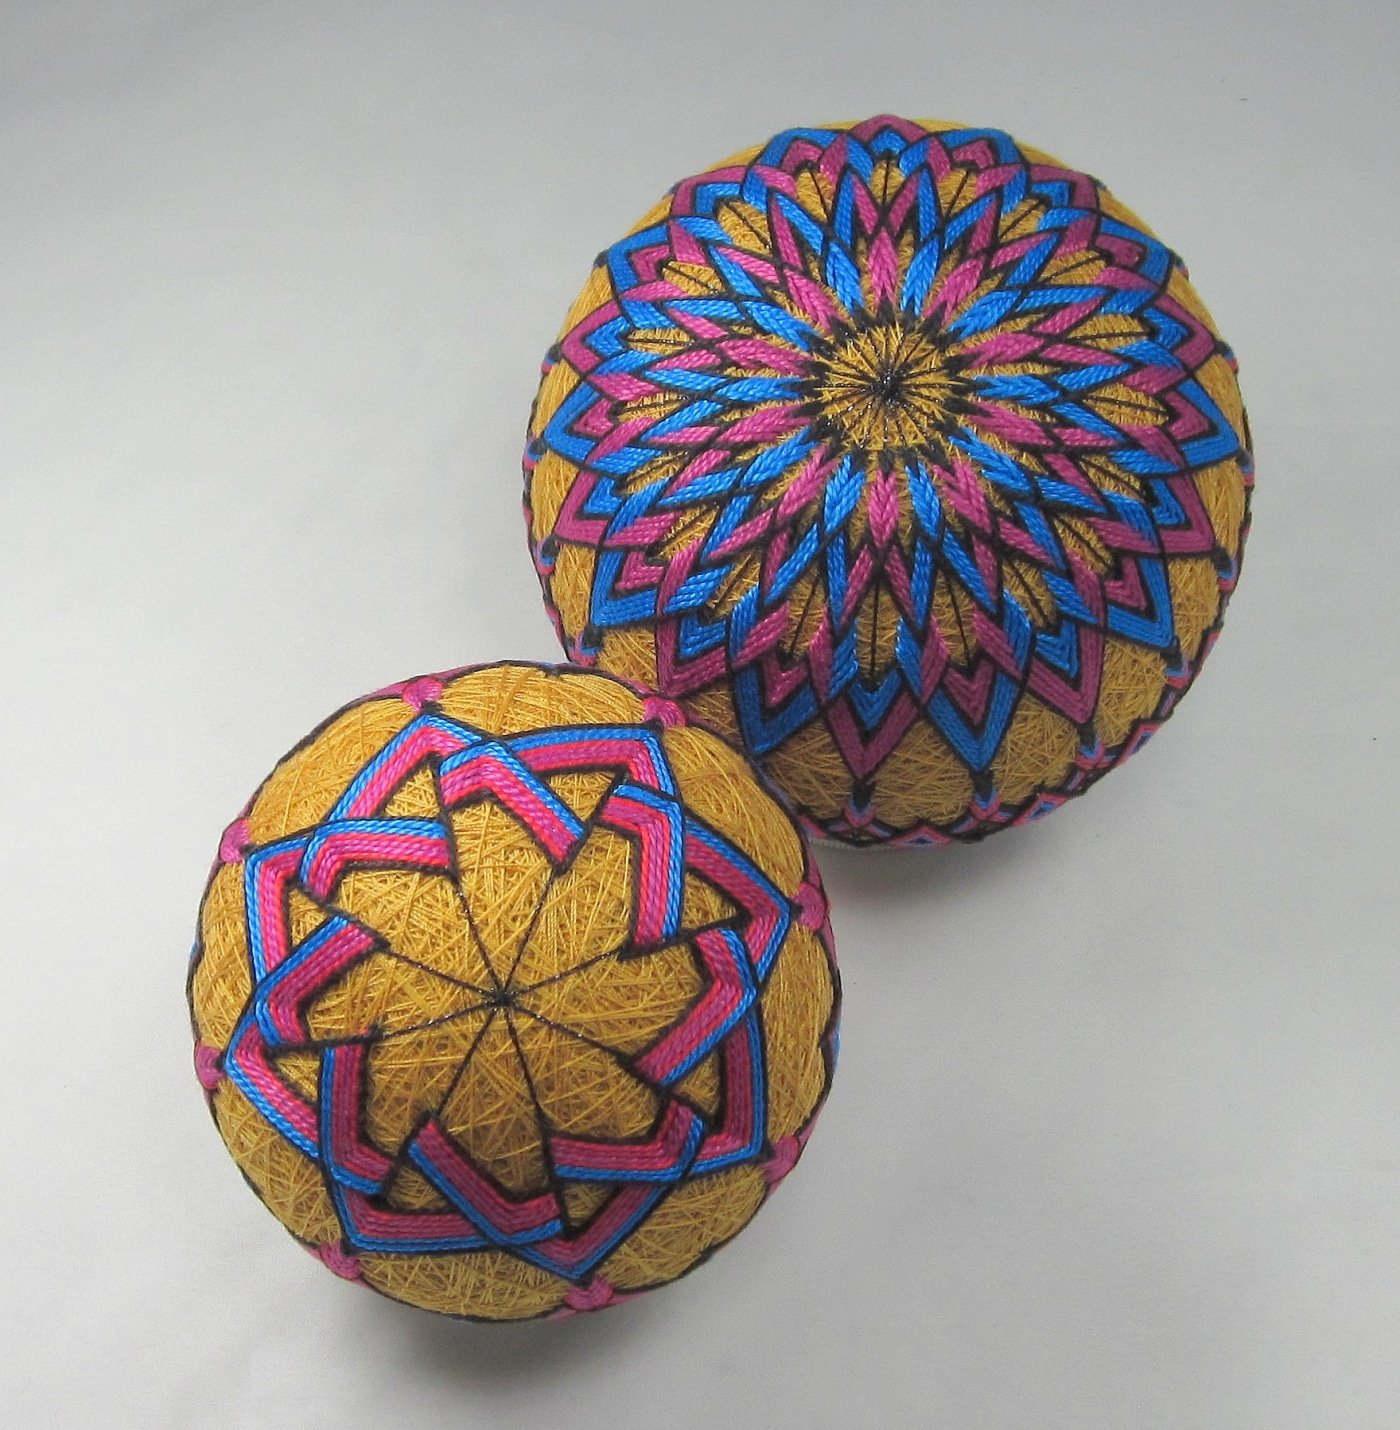 Temari balls with geometric patterns